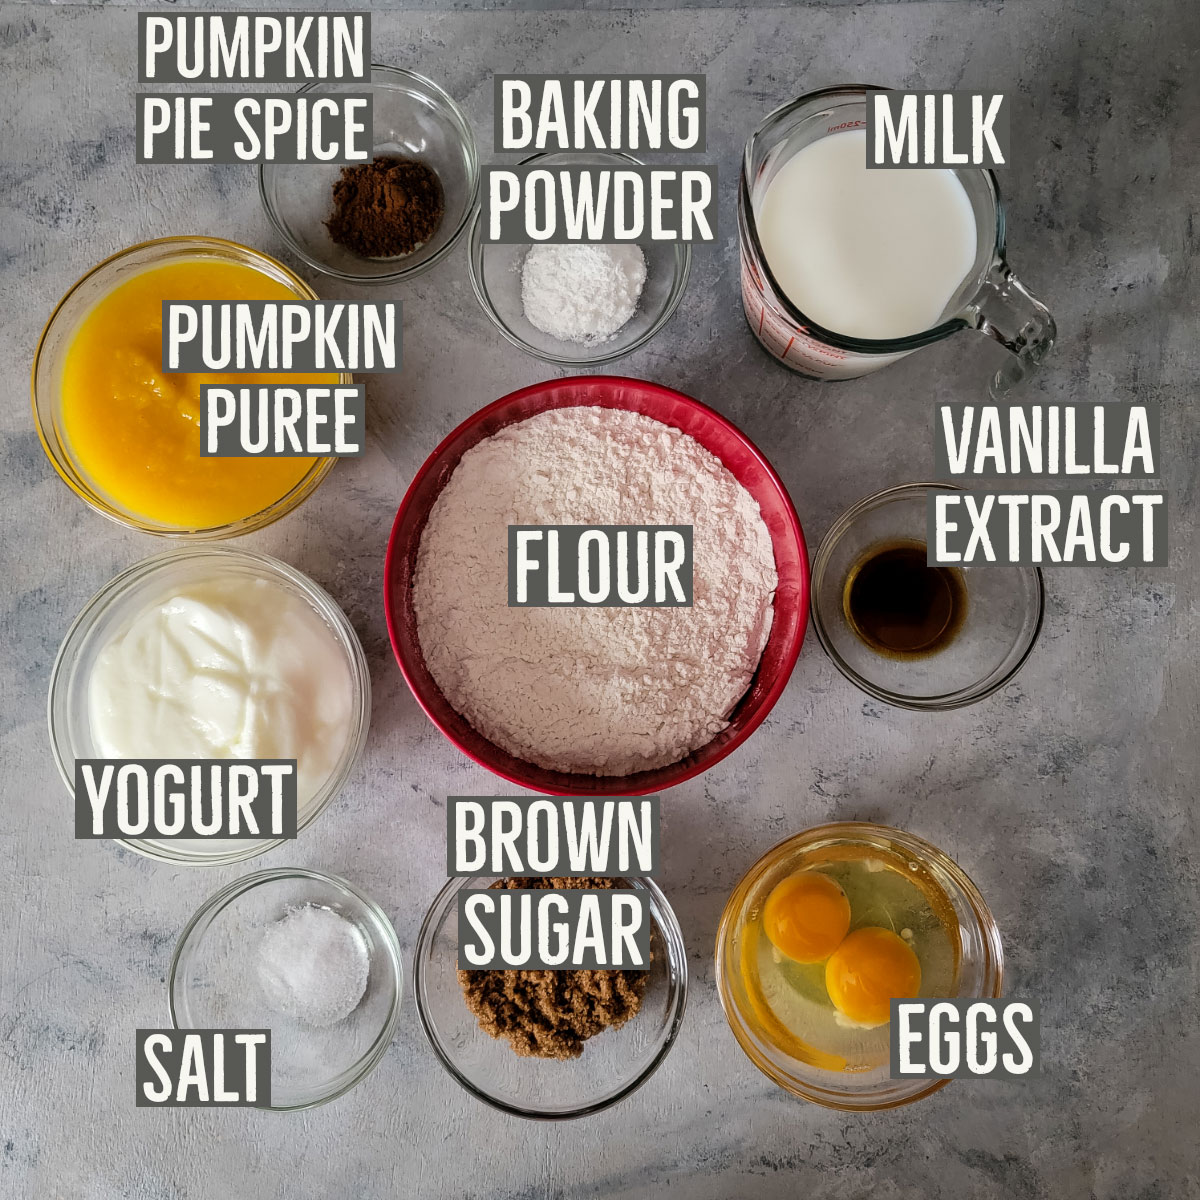 Pumpkin pie spice, baking powder, milk, pumpkin puree, flour, vanilla extract, yogurt, salt, brown sugar and eggs in small prep bowls to display all ingredients.